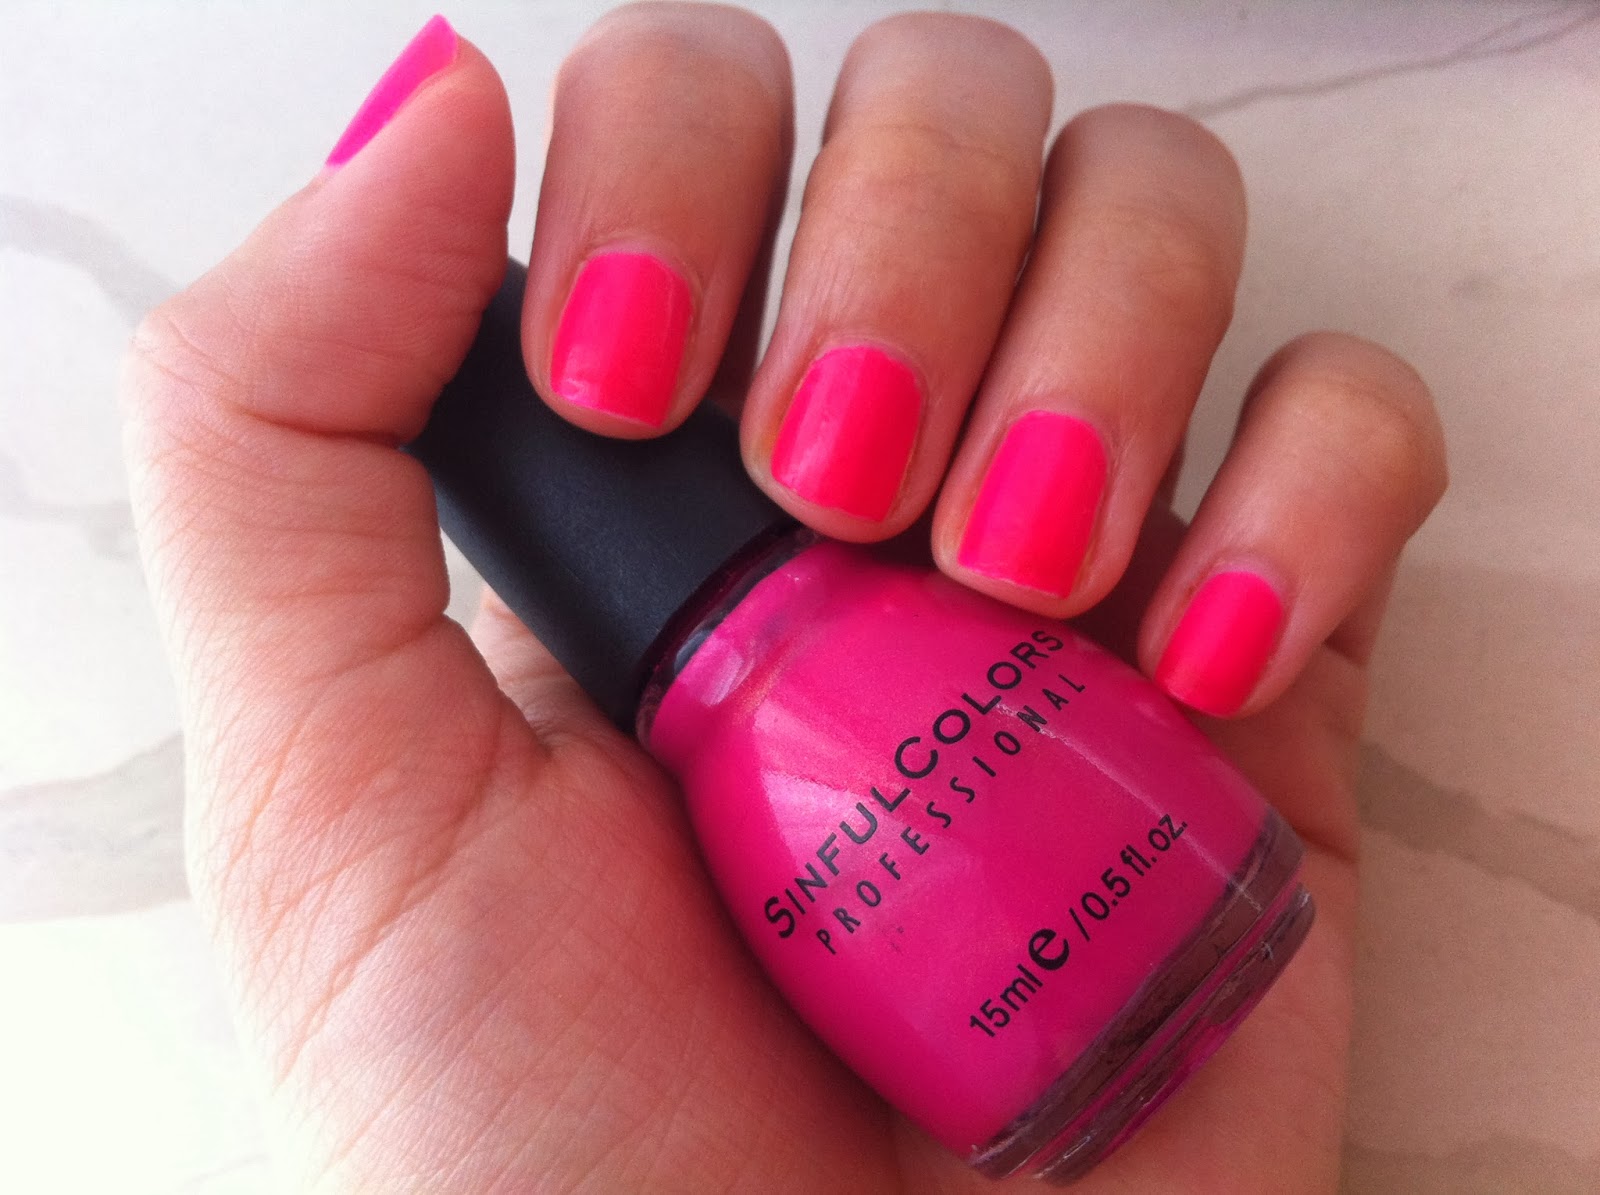 Sinful Colors Professional Nail Polish, Pinky Glitter - wide 10